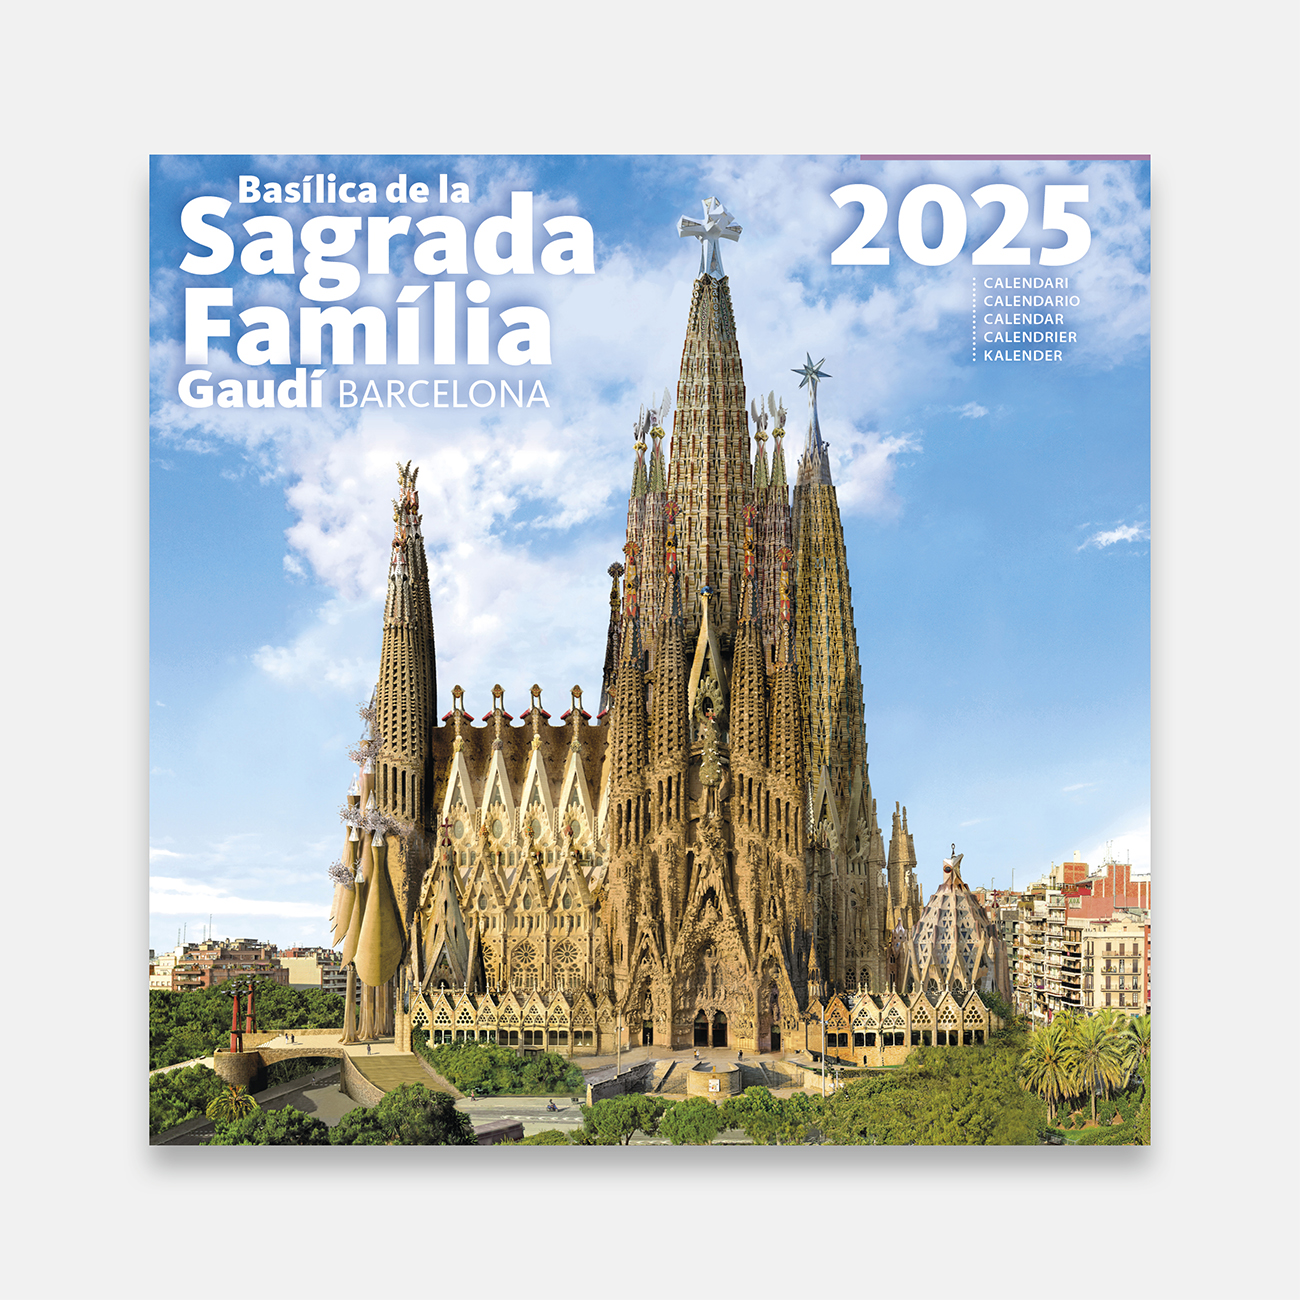 Calendari 2025 Basílica de la Sagrada Família 25sf1 calendario pared 2025 sagrada familia